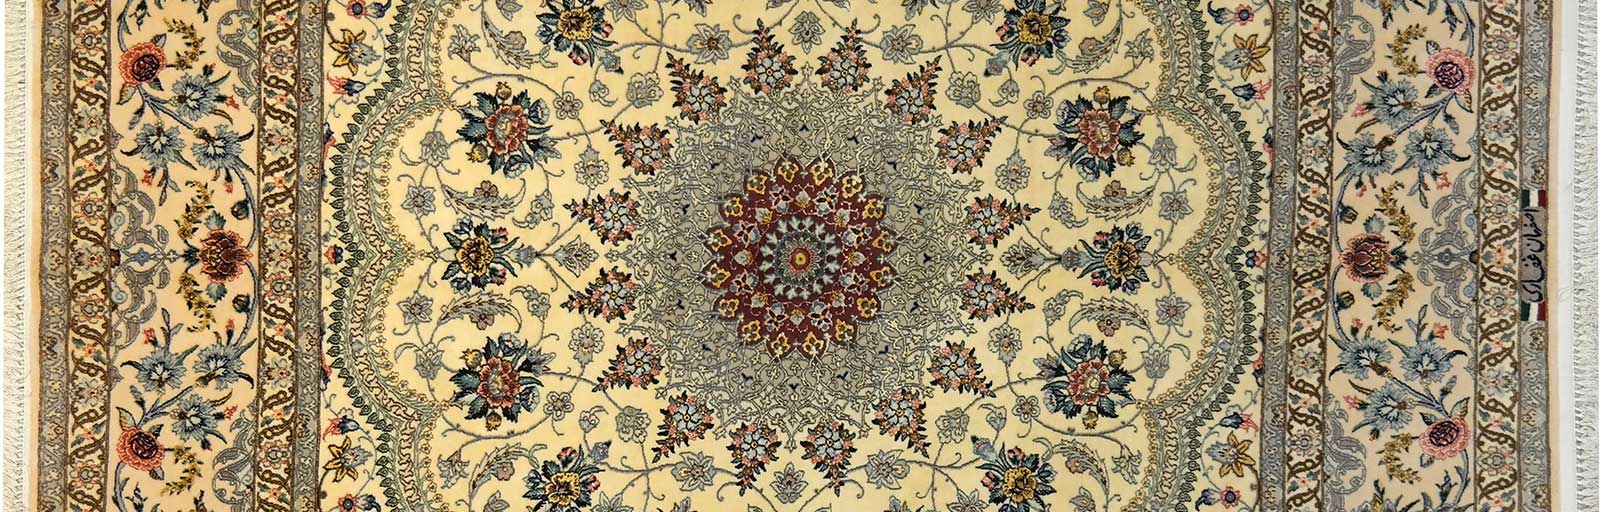 Persian carpet Isfahan